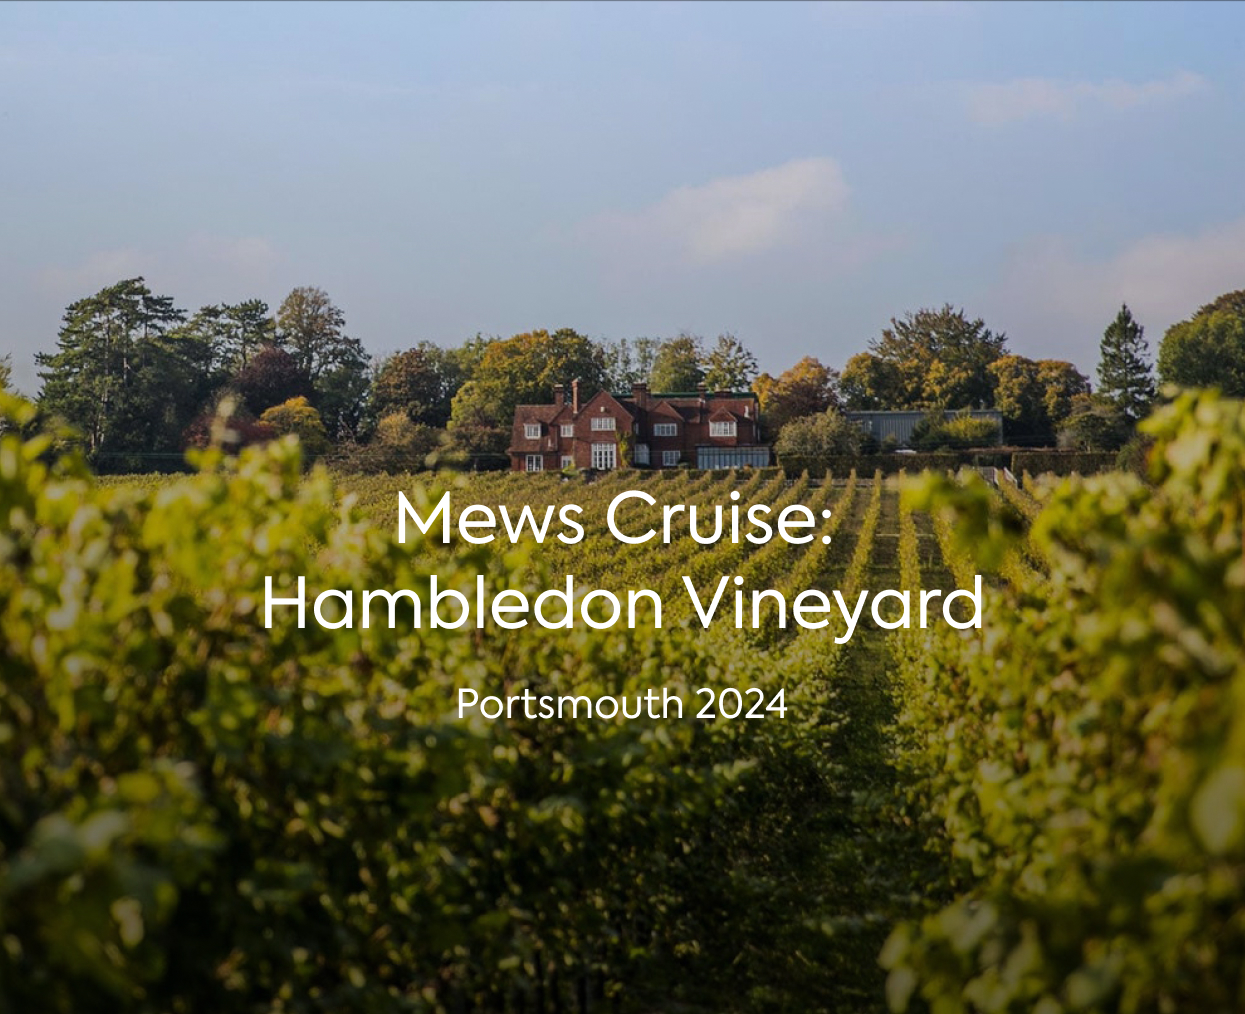 Mews Cruise: Hambledon Vineyard event